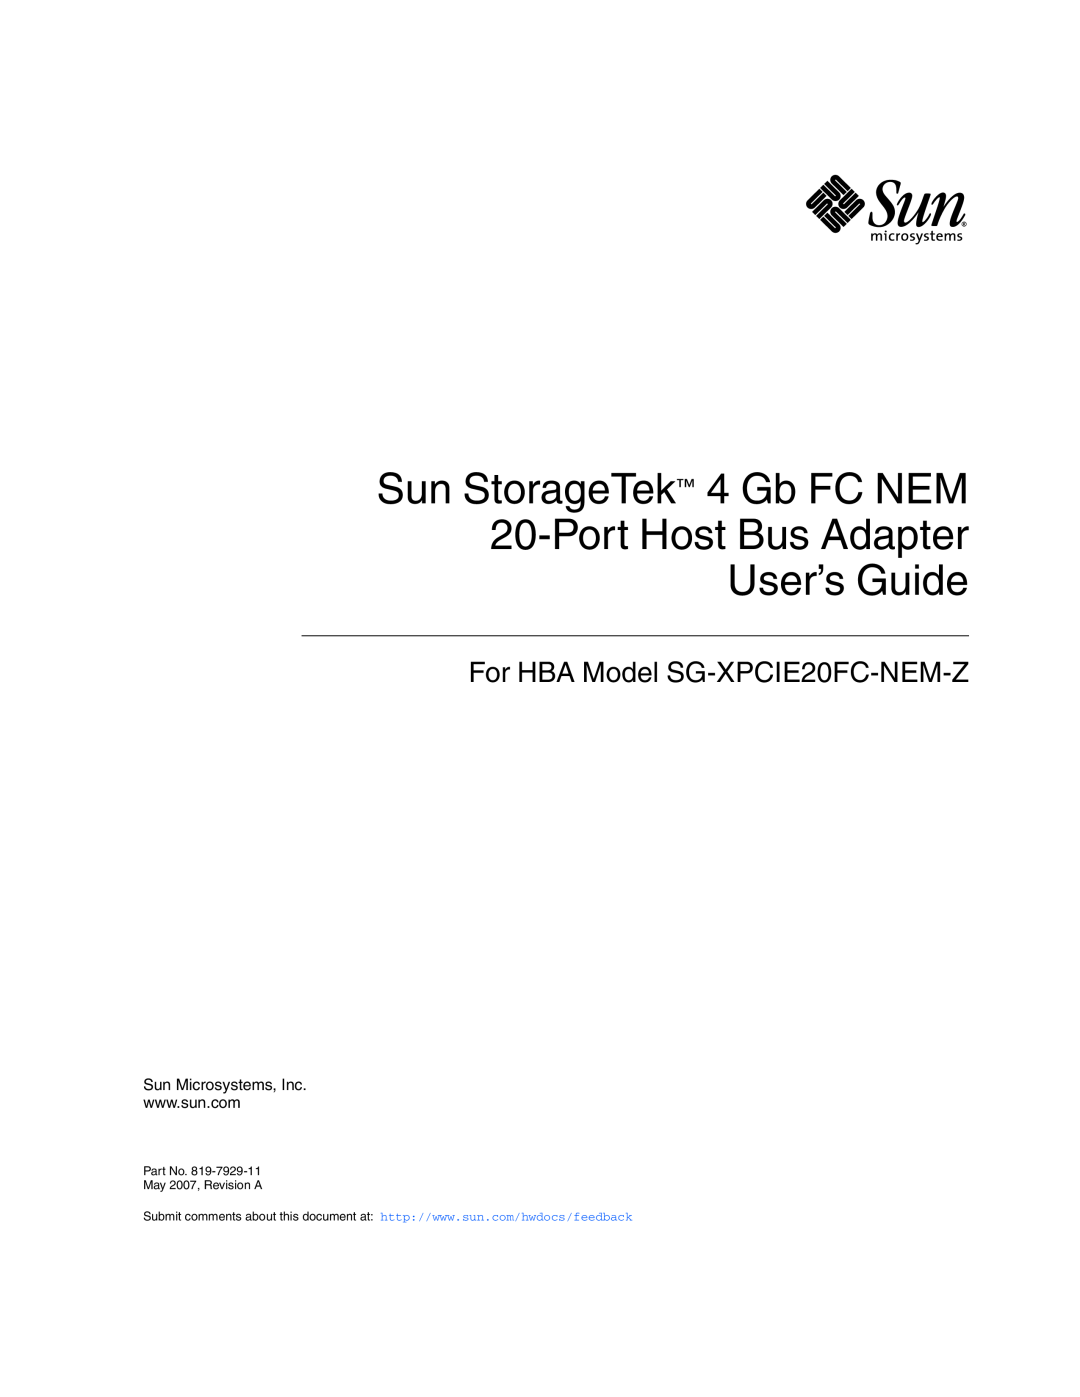 Sun Microsystems 2.0 manual Sun StorageTek 4 Gb FC NEM 20-Port Host Bus Adapter User’s Guide, Sun Microsystems, Inc 